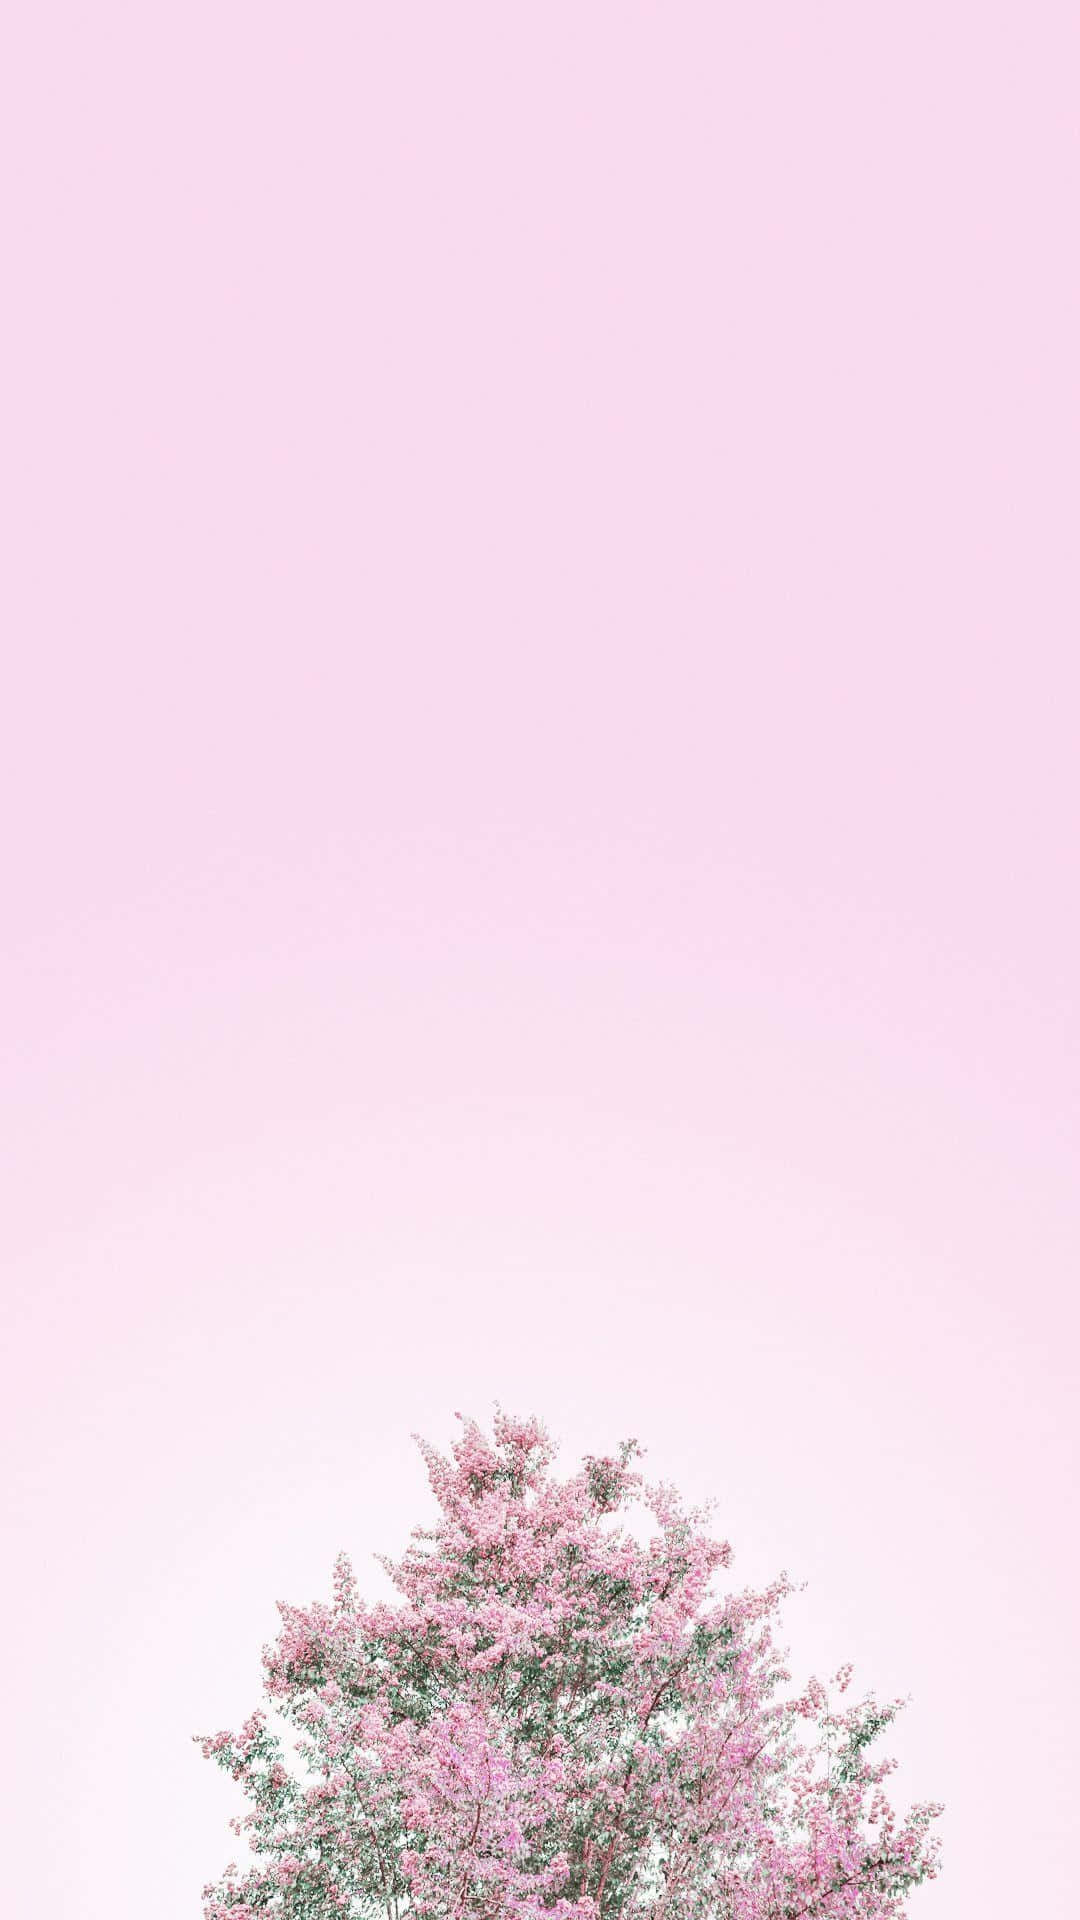 Pink Blossom Against Pastel Sky.jpg Wallpaper